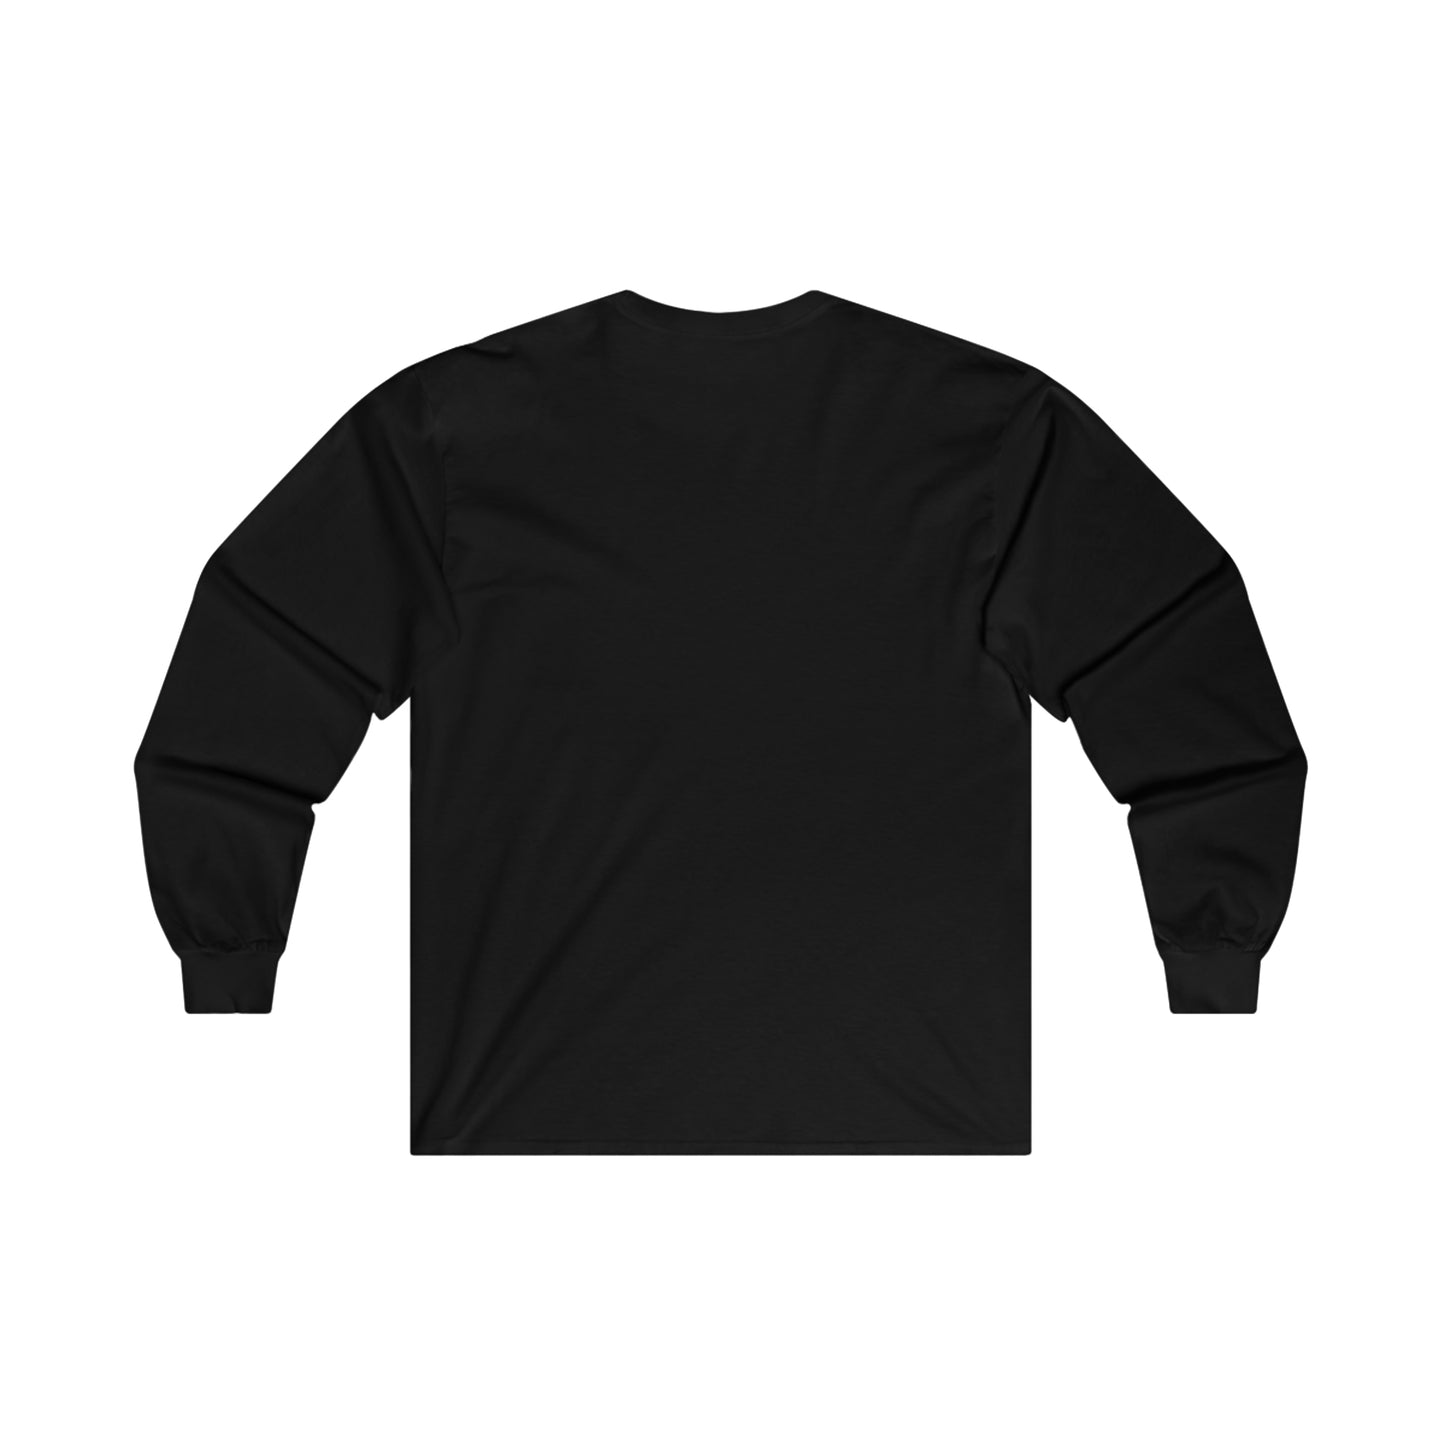 Balboni Construction - Long Sleeve Shirt